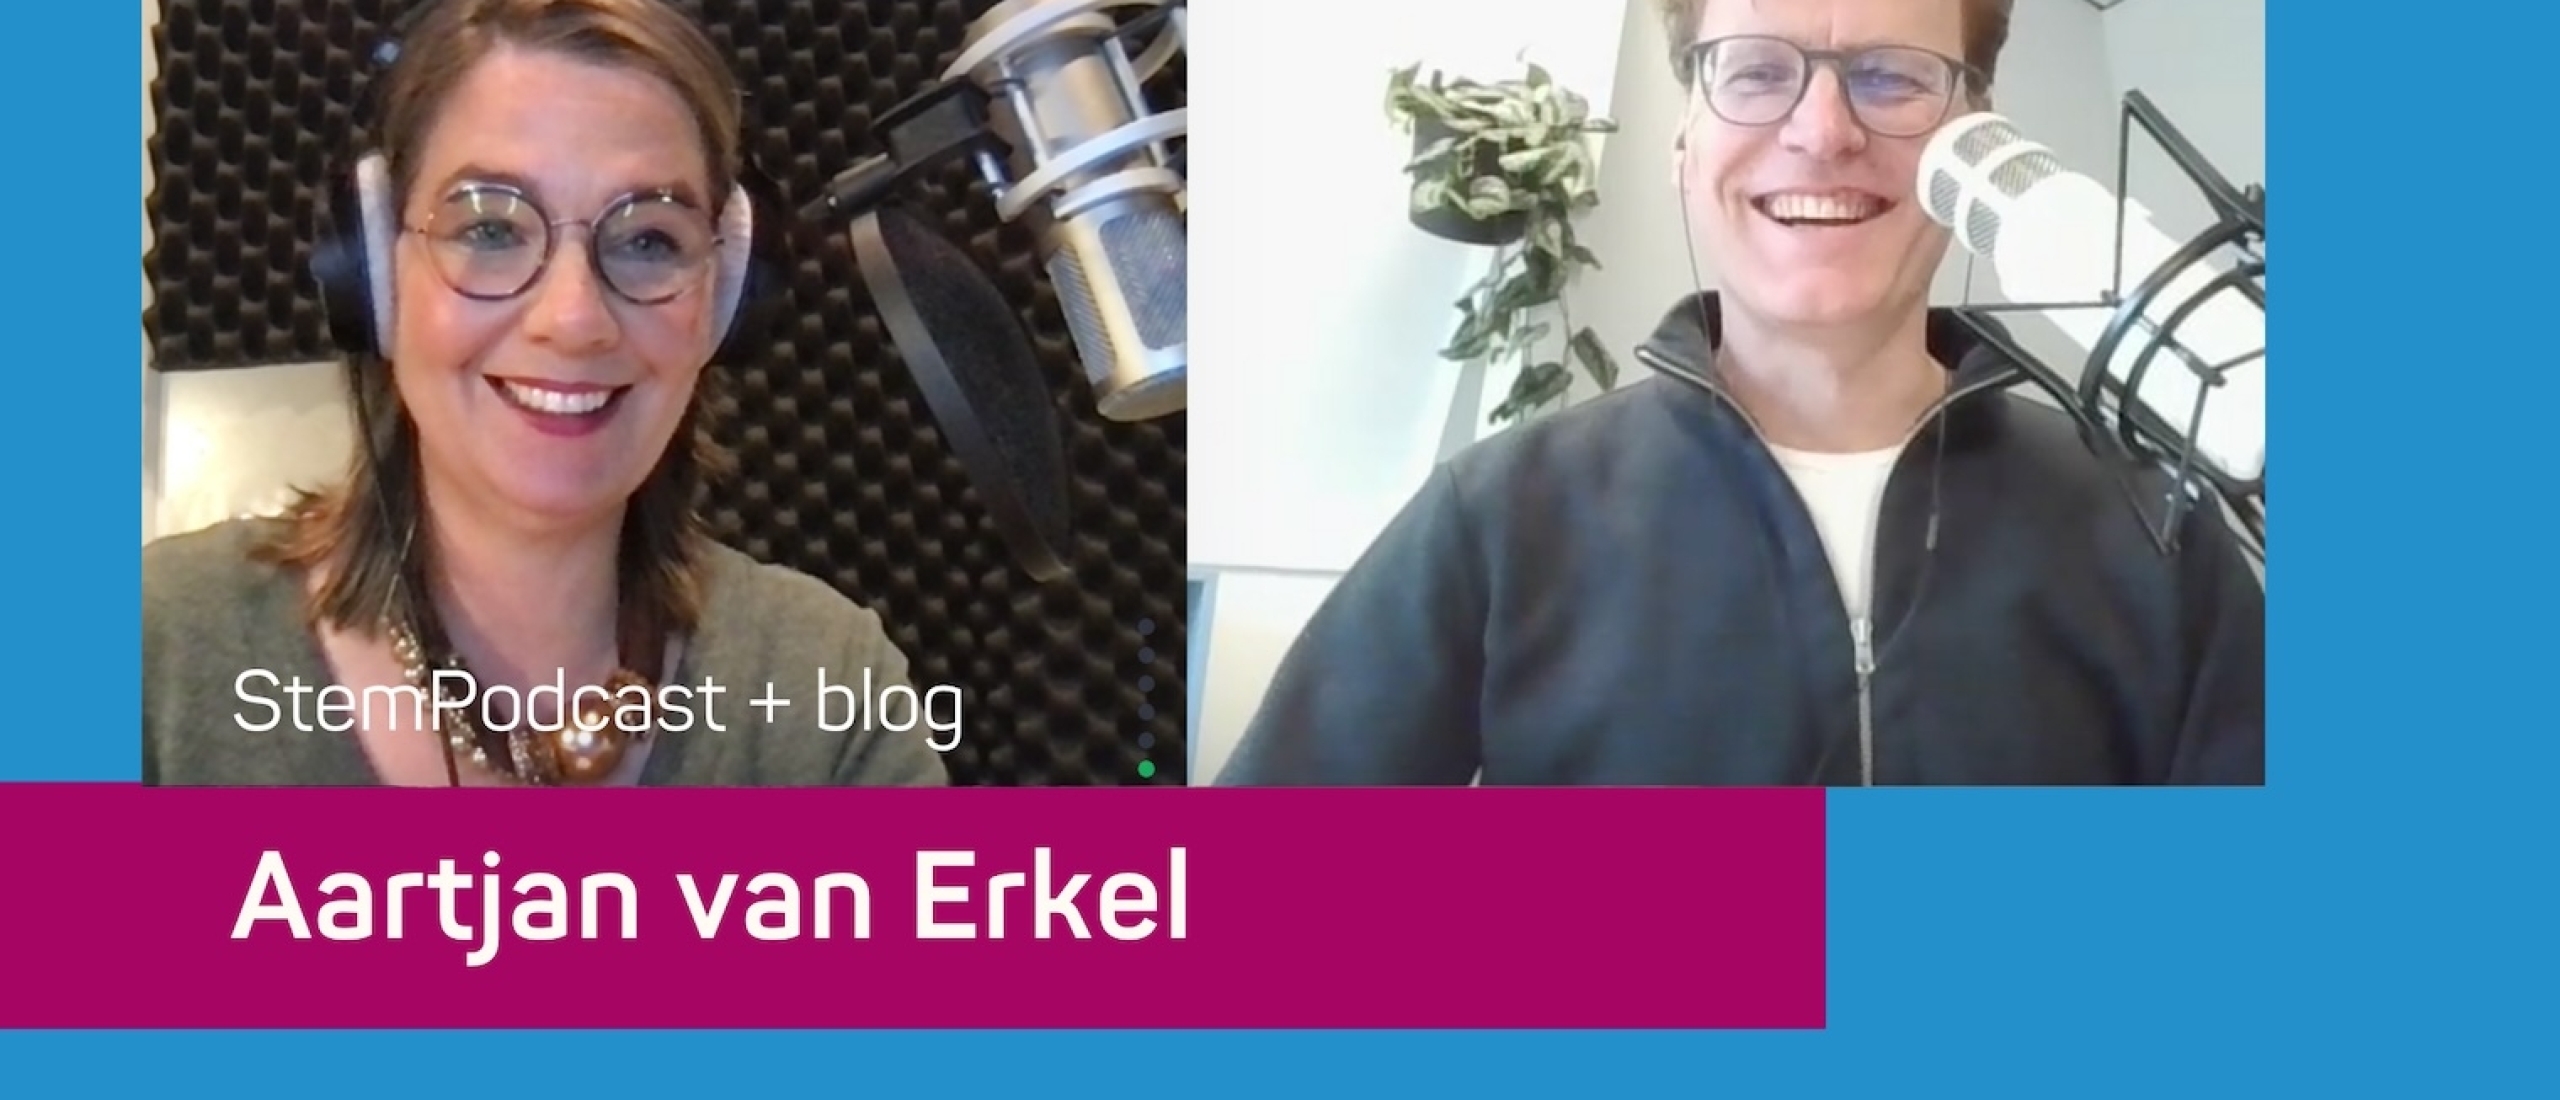 Copywriter Aartjan van Erkel in de StemPodcast: ‘Goed spreken is gewoon in je enthousiasme gaan zitten'